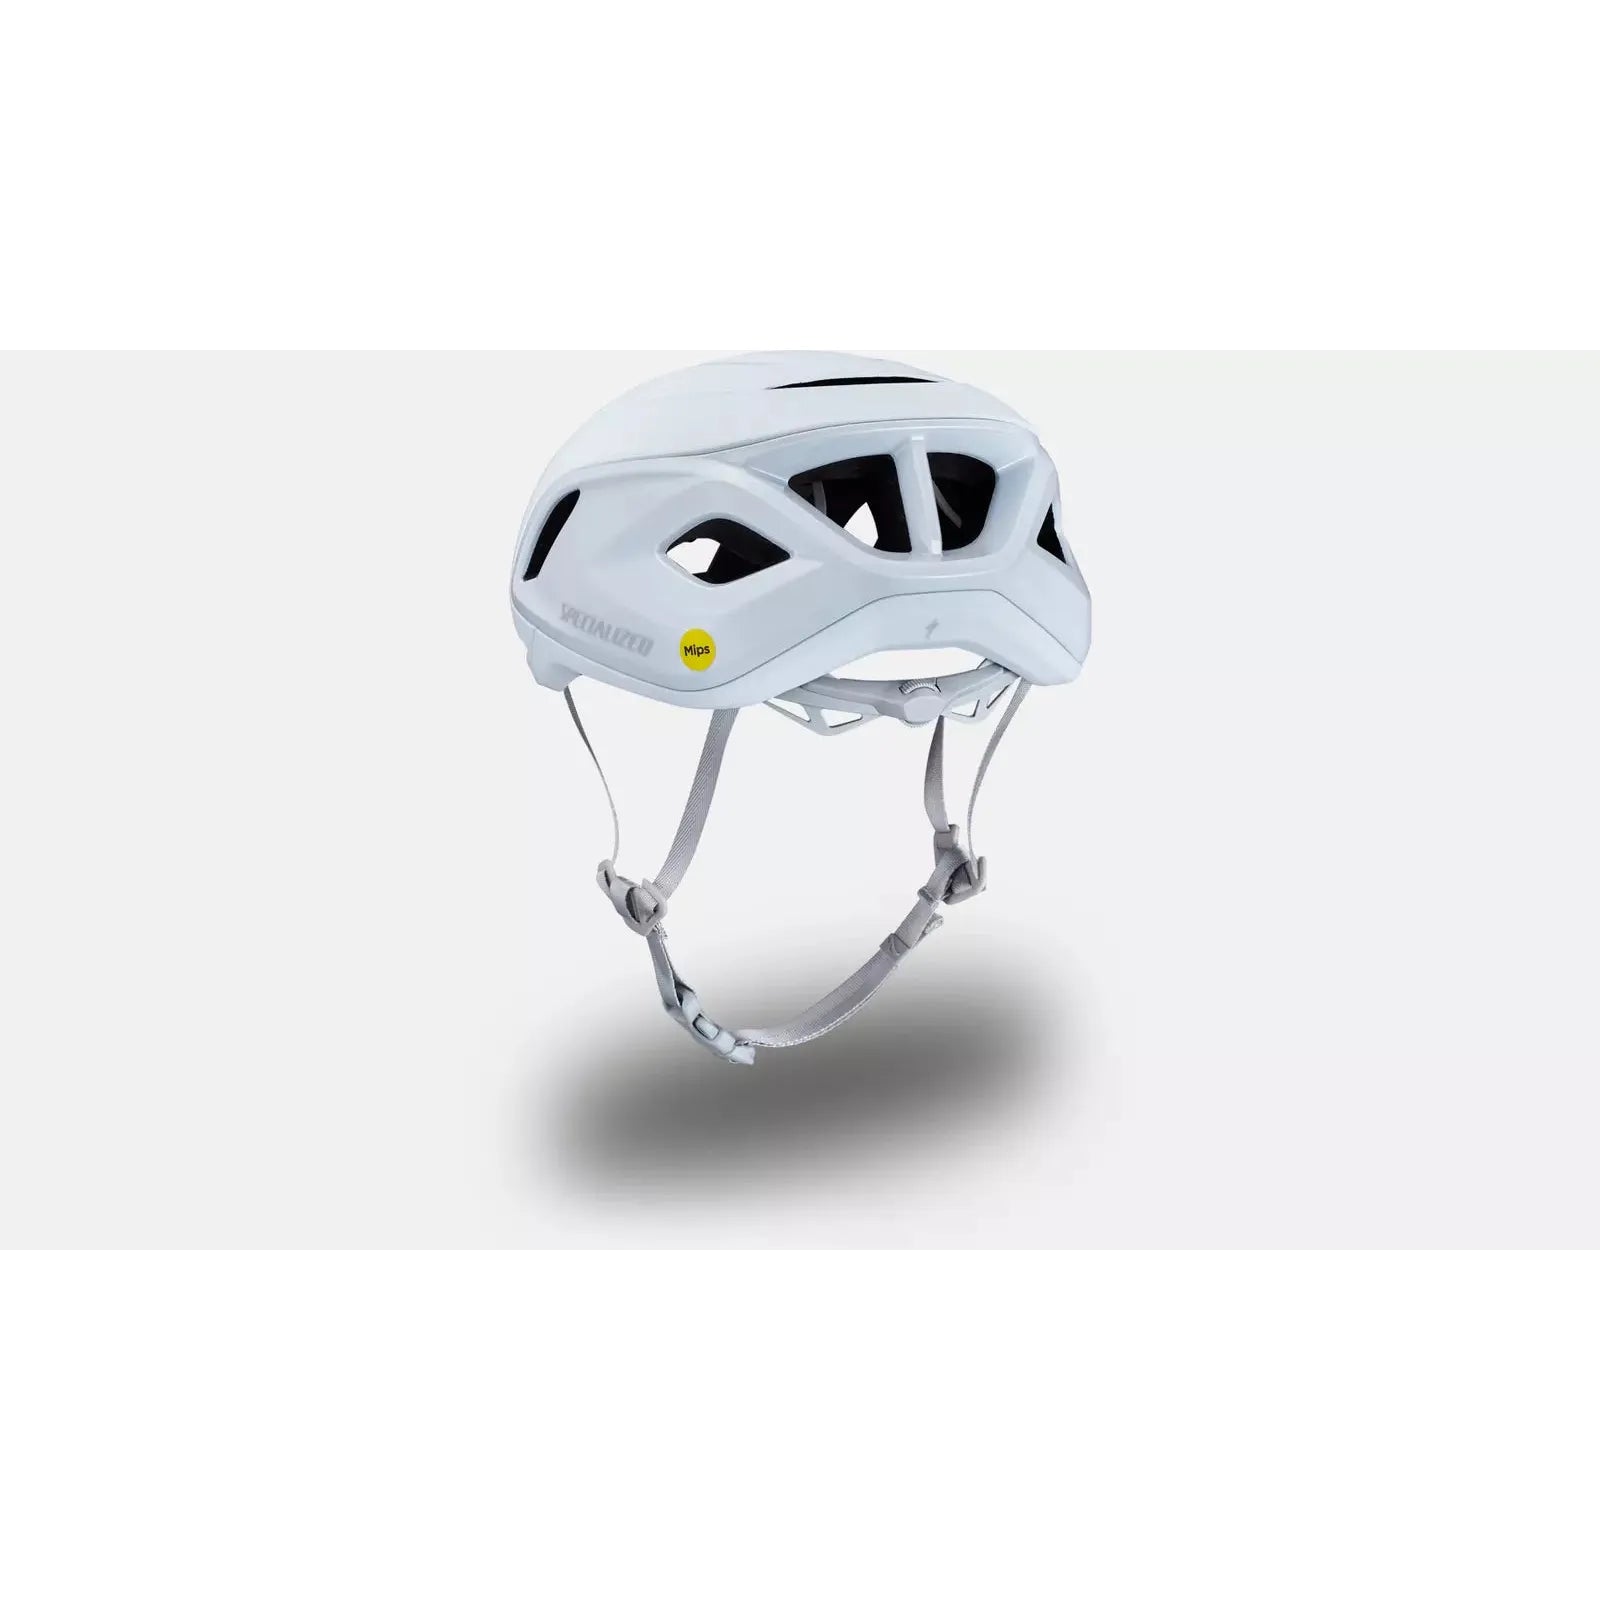 Specialized Propero 4 Helmet White